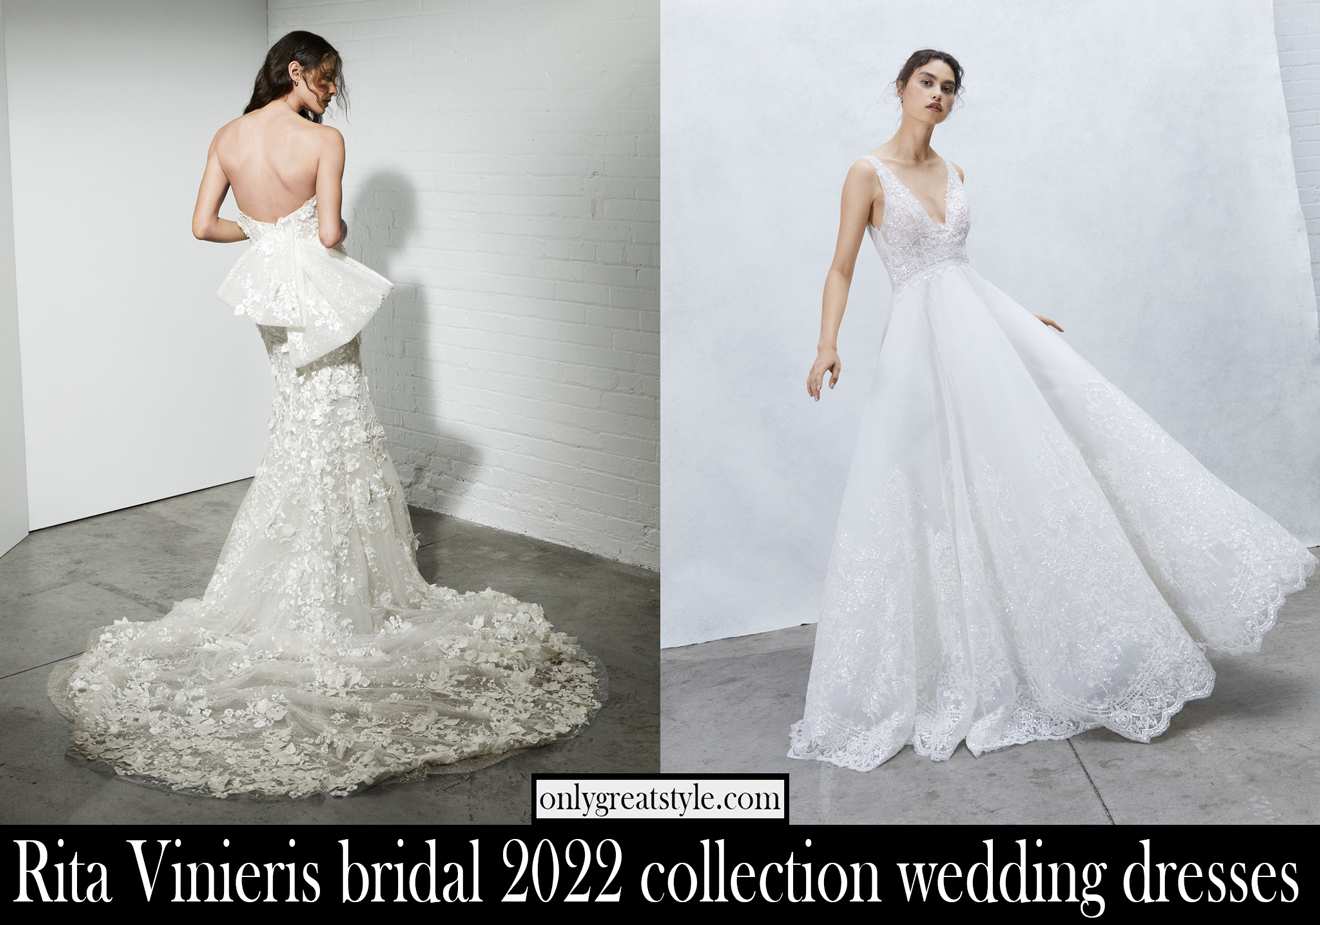 Rita Vinieris bridal 2022 collection wedding dresses